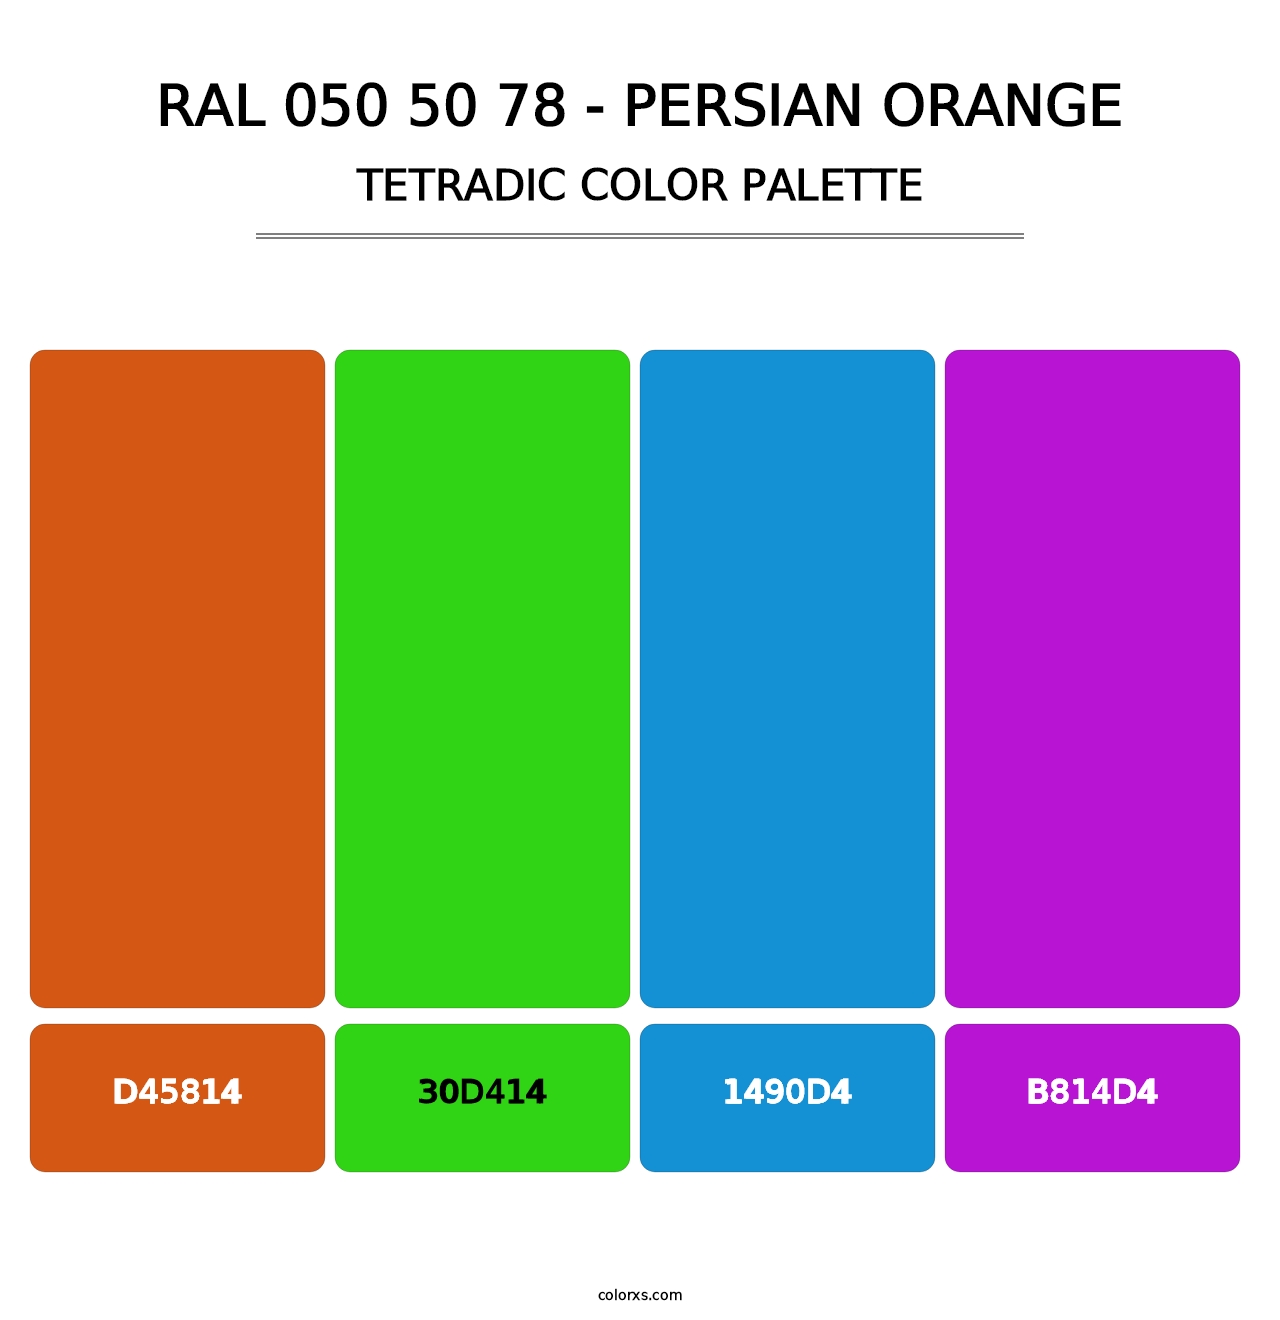 RAL 050 50 78 - Persian Orange - Tetradic Color Palette